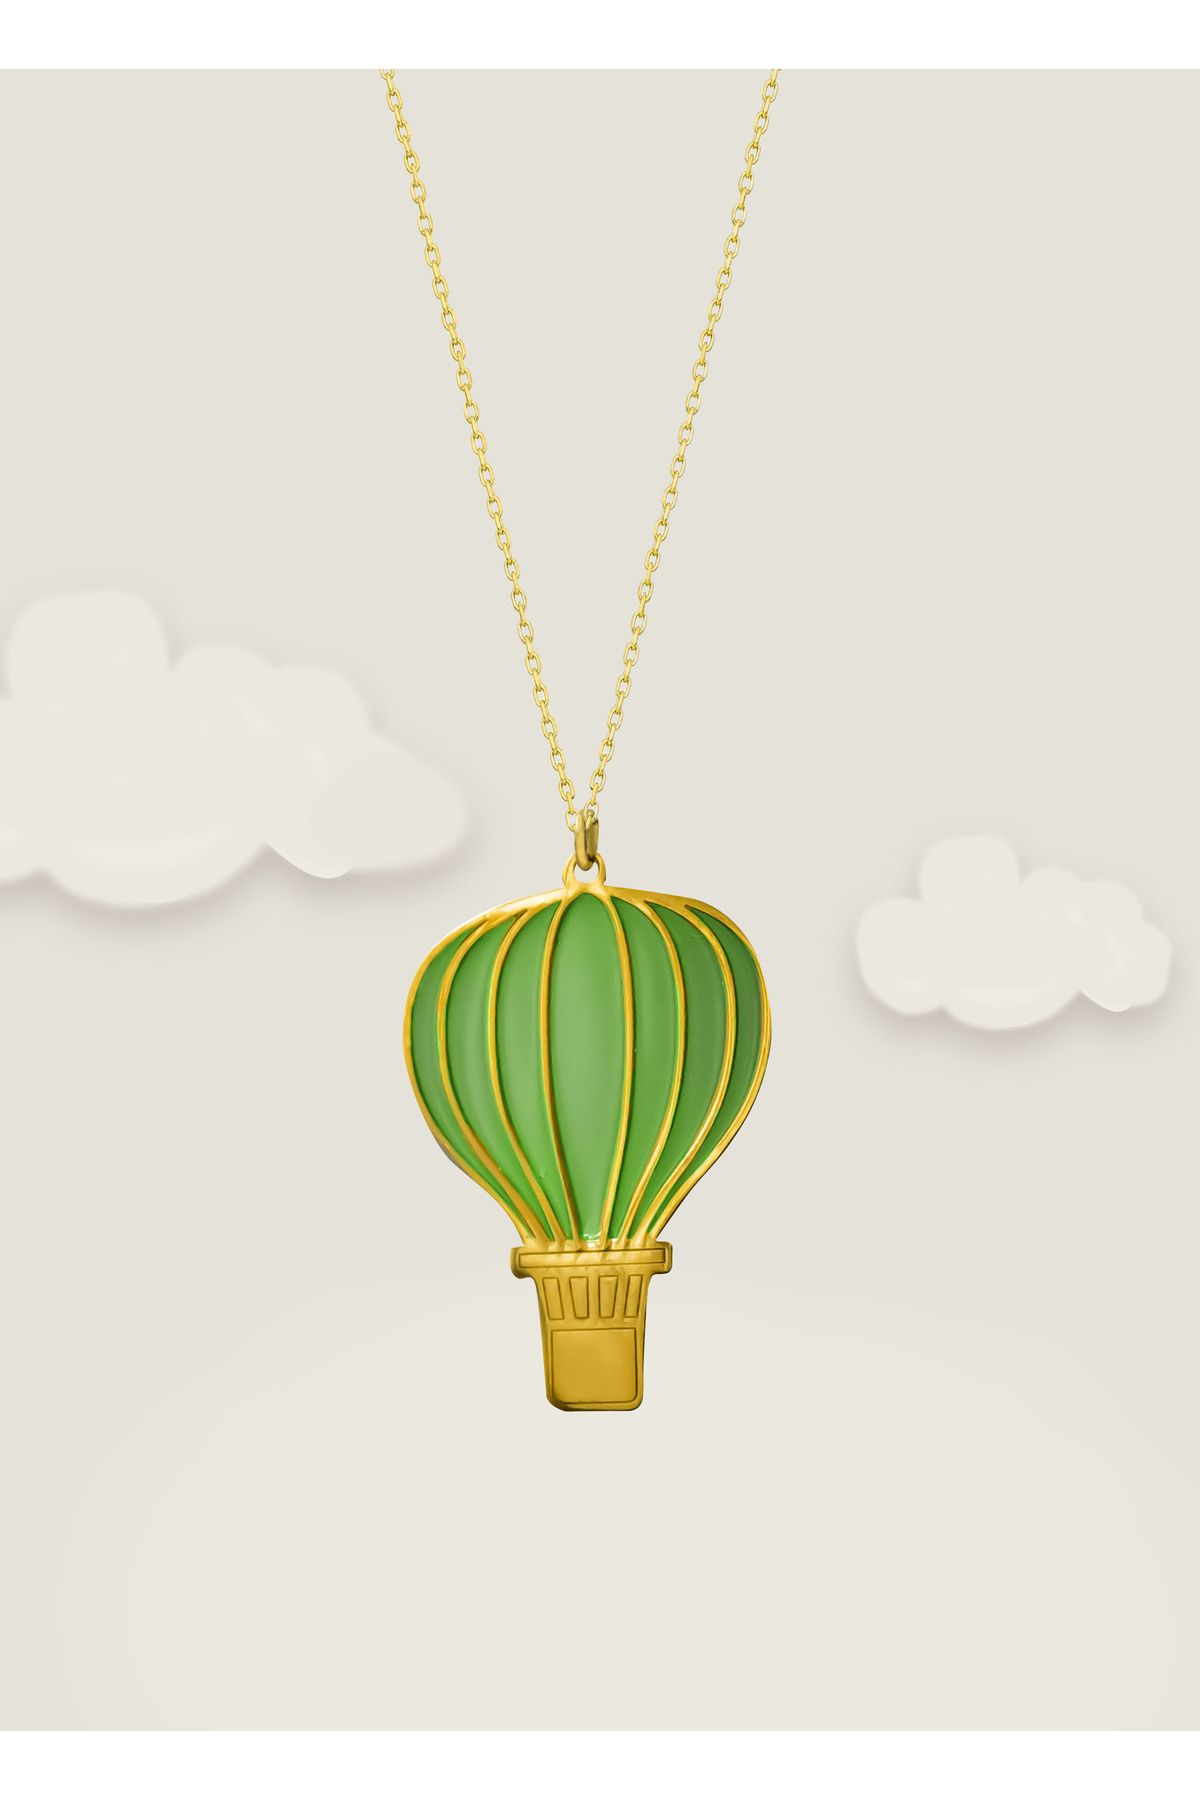 Papatya Silver 925 Ayar Gümüş Gold Kaplama Rüya Serisi Cam Boyalı Yeşil Uçan Balon Kolye